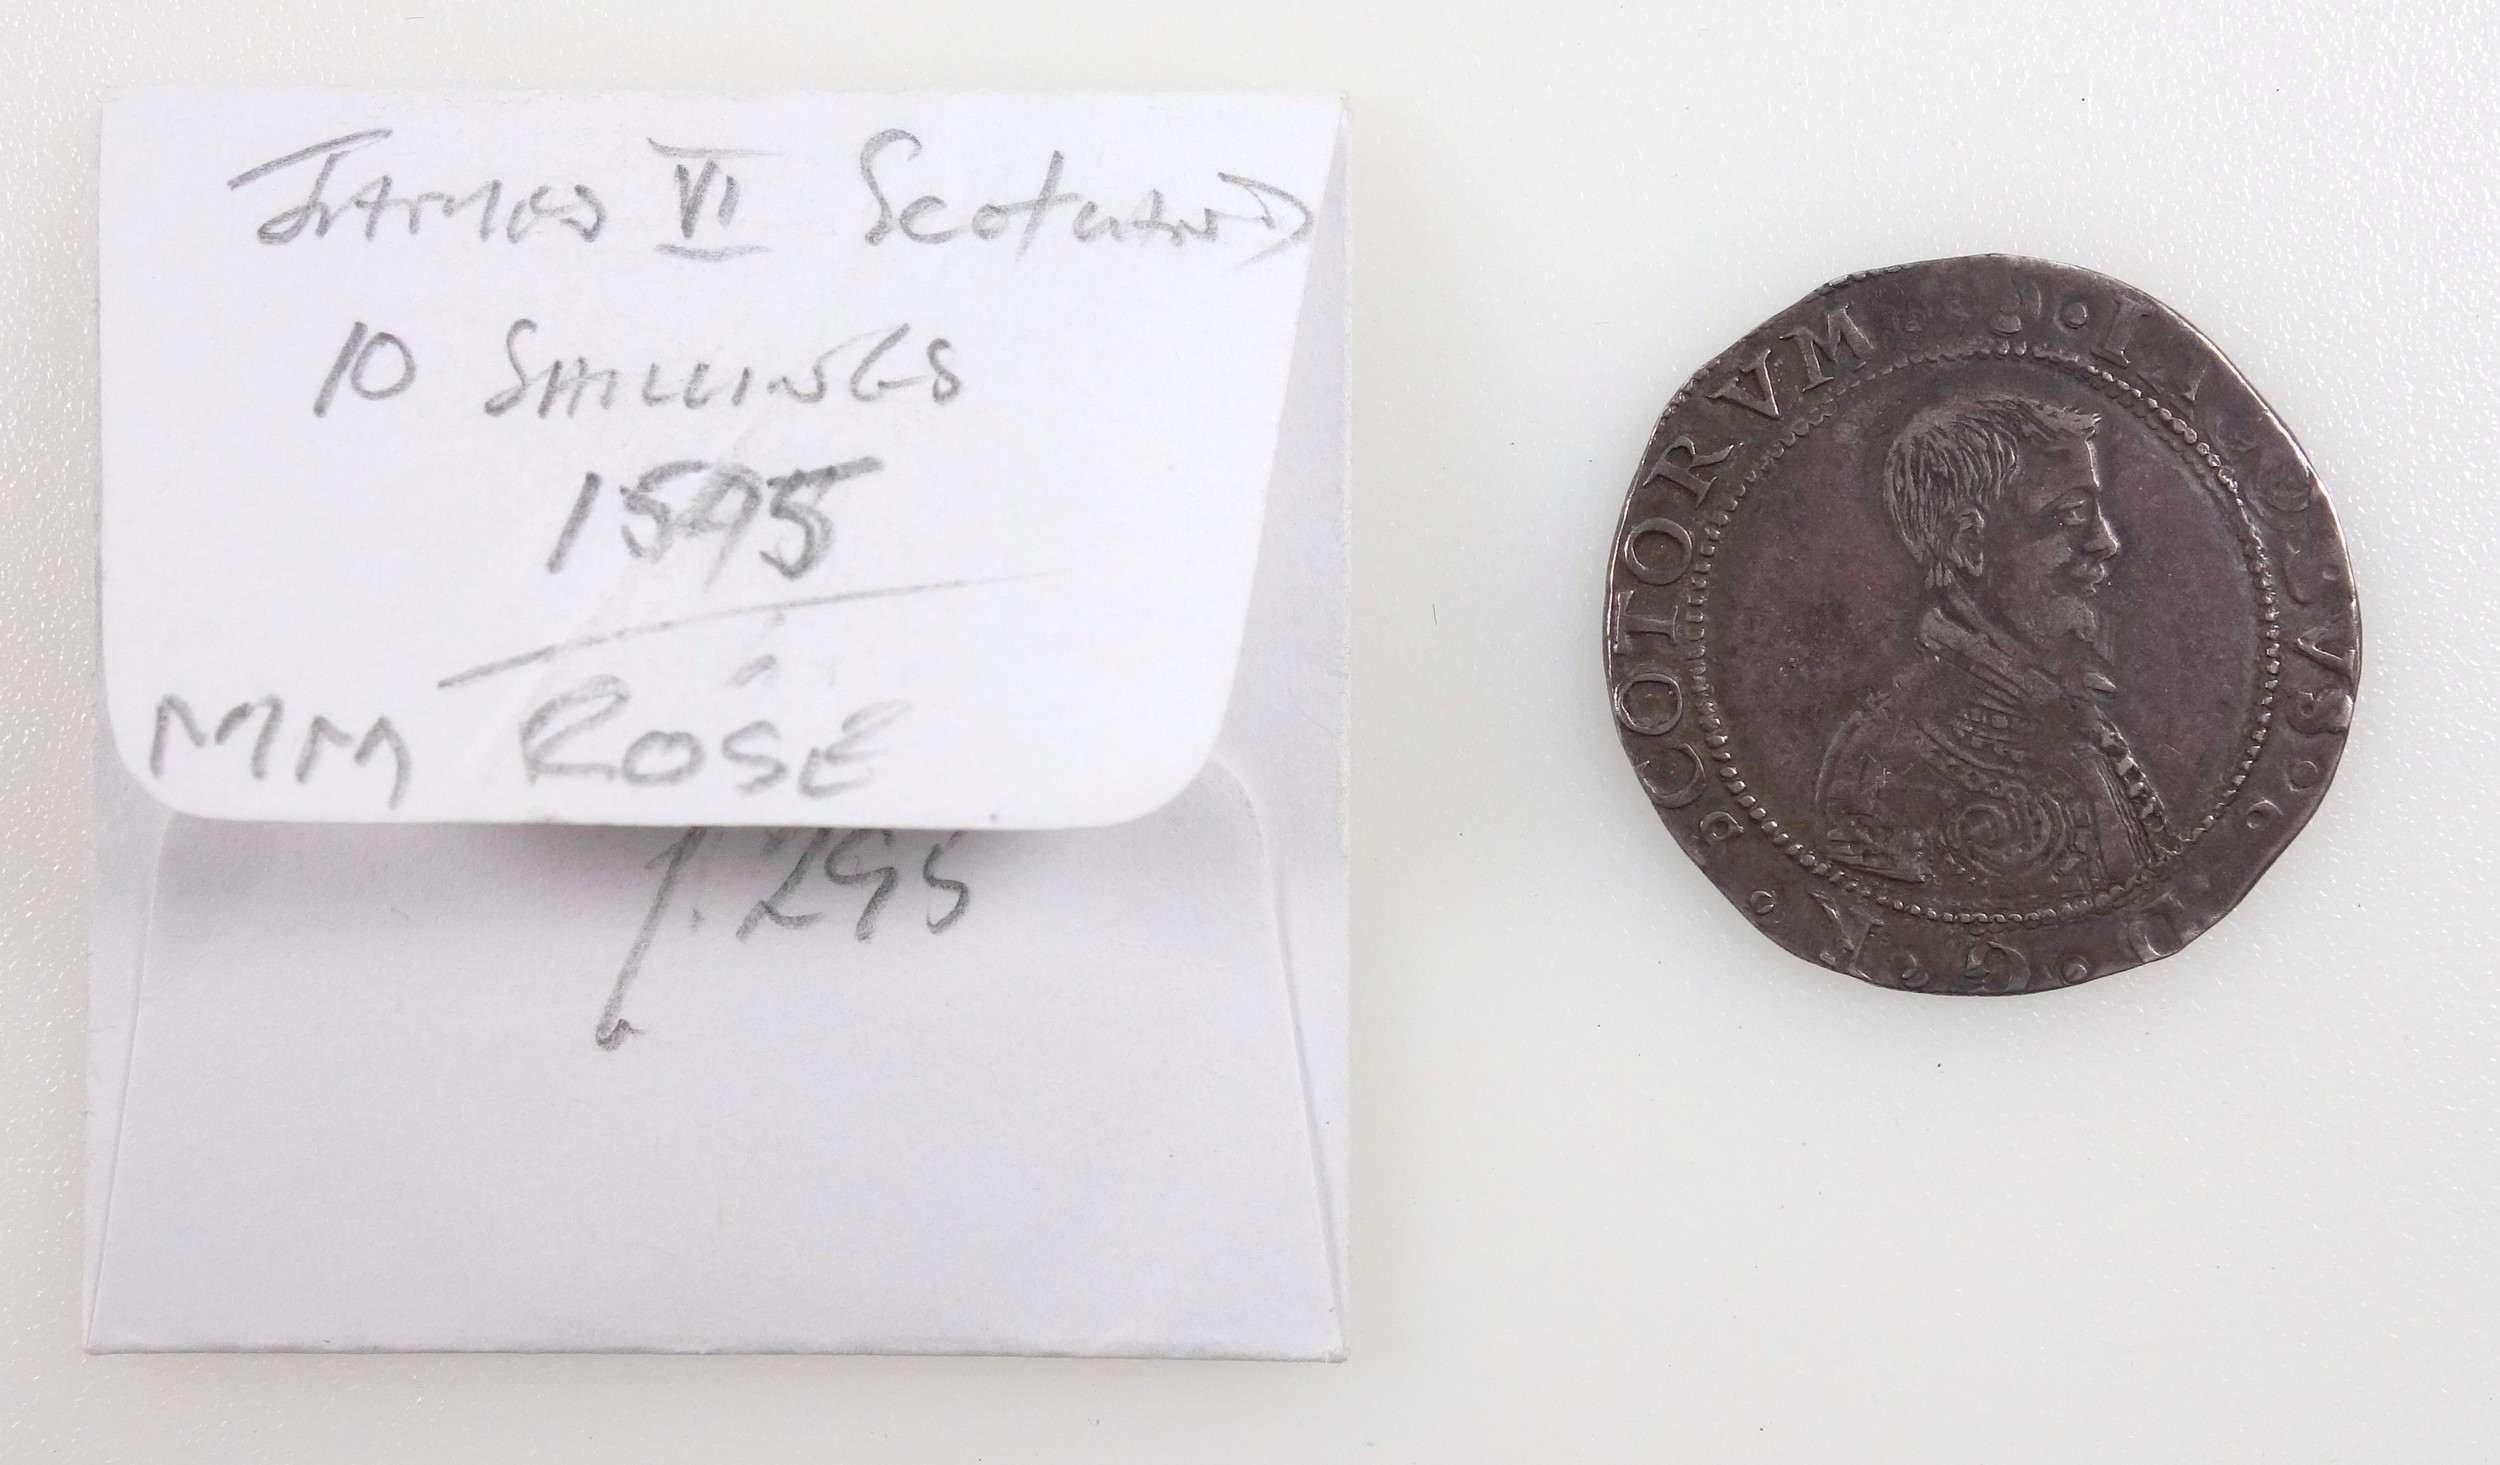 Scotland James VI 10 shillings, m.m. rose, 1595, f. - Image 3 of 4